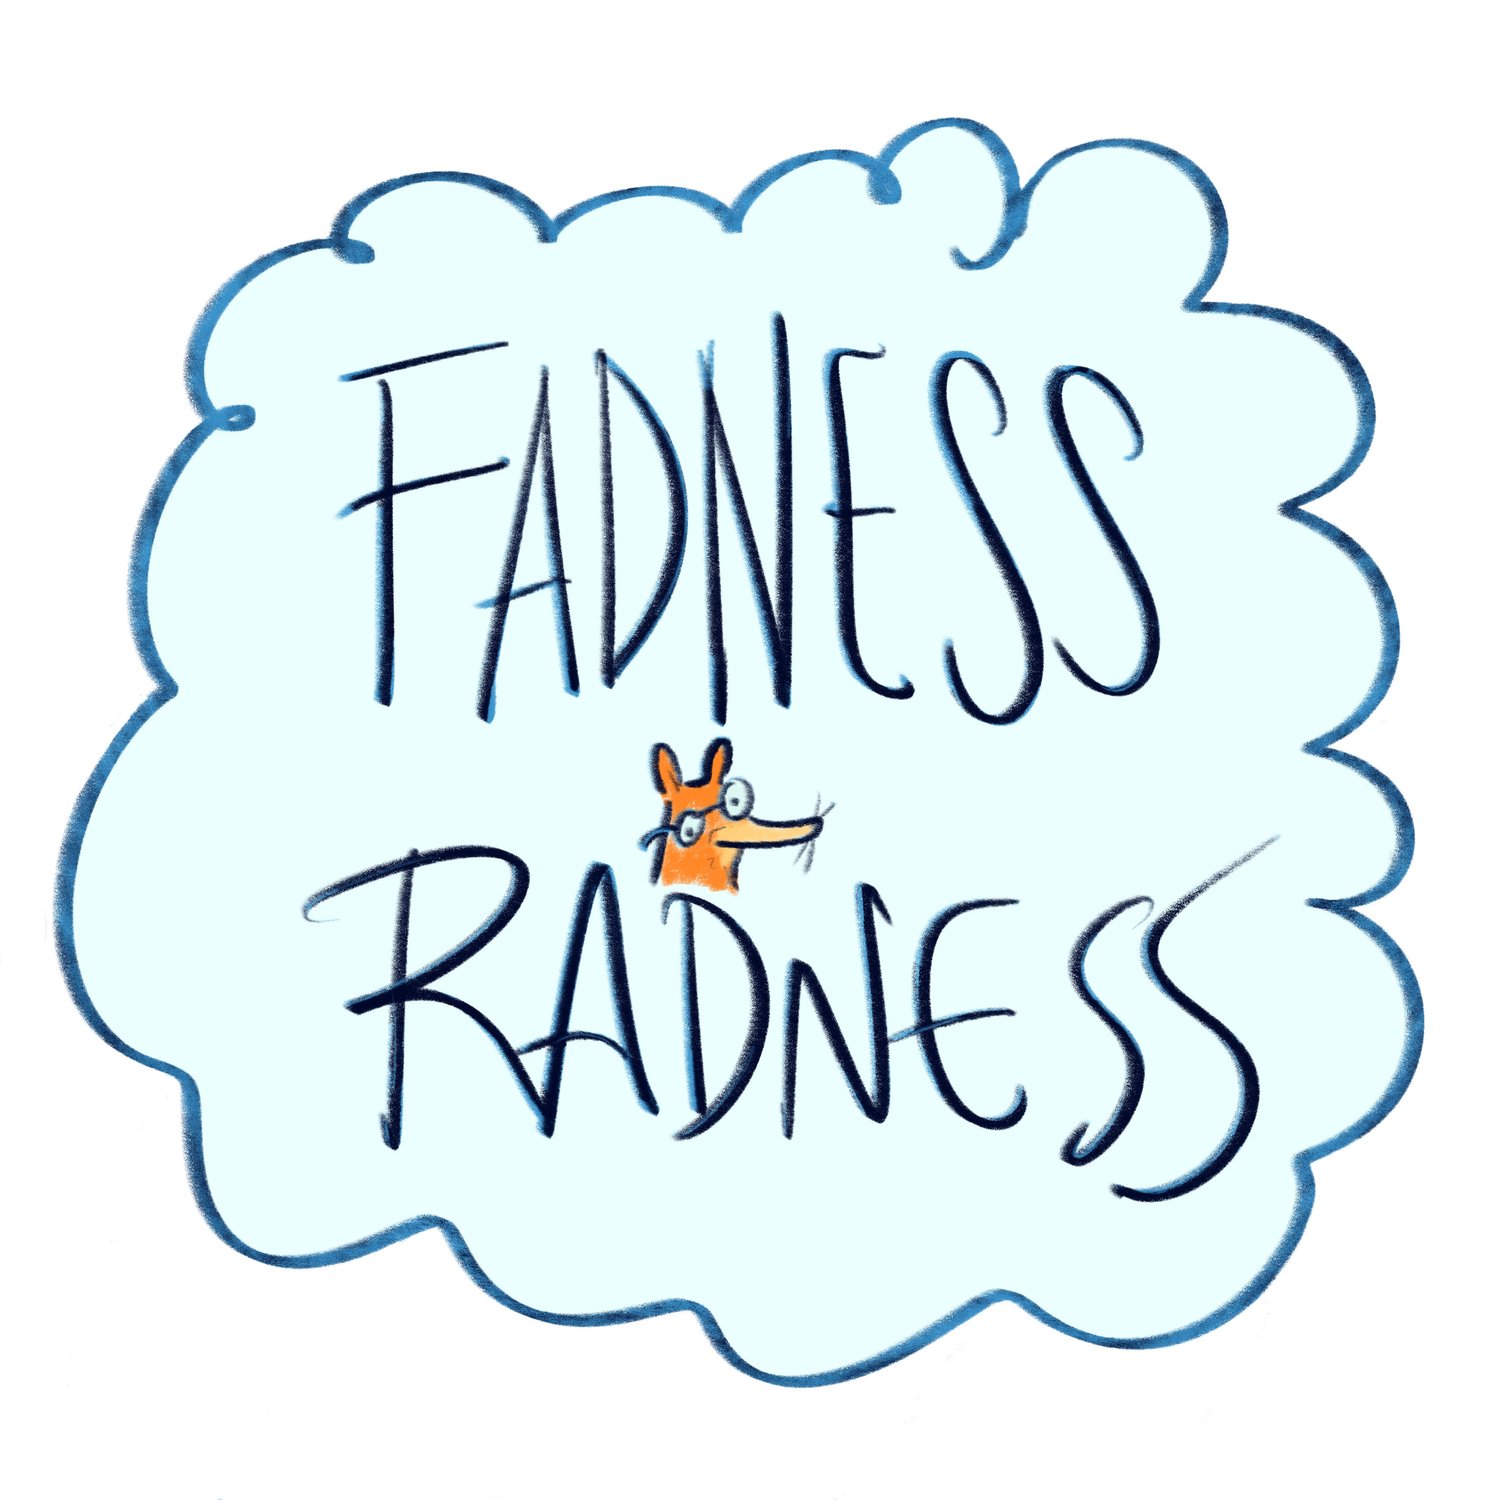 Fadness Radness